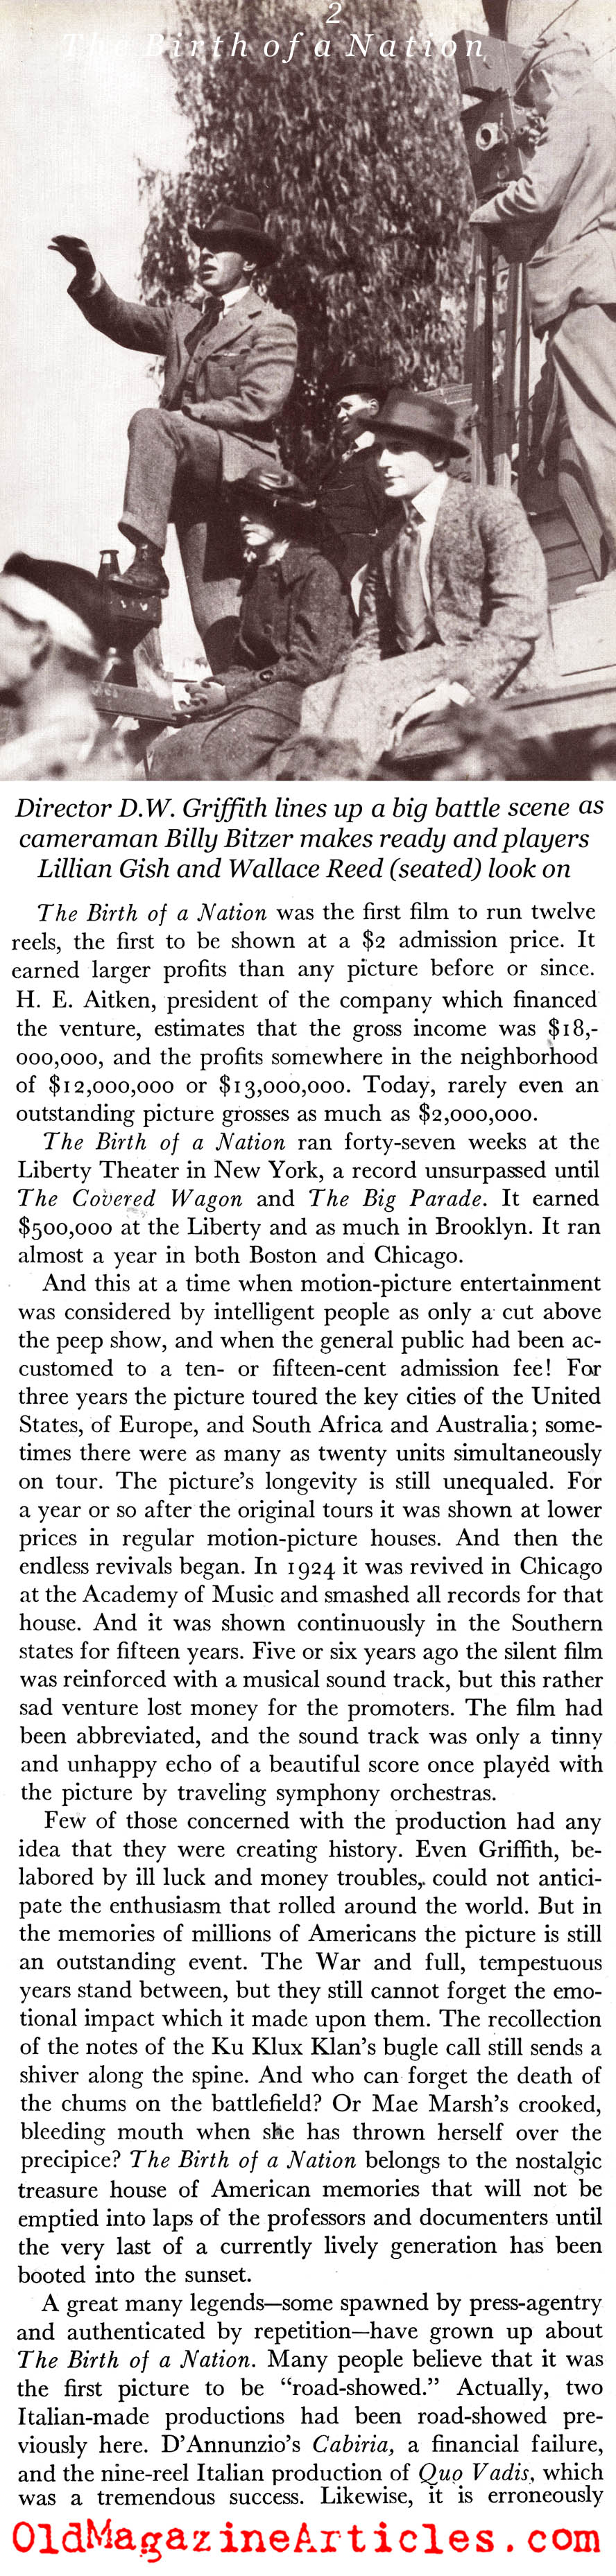 More on <i>Birth of a Nation</i> (Scribner's Magazine, 1937)